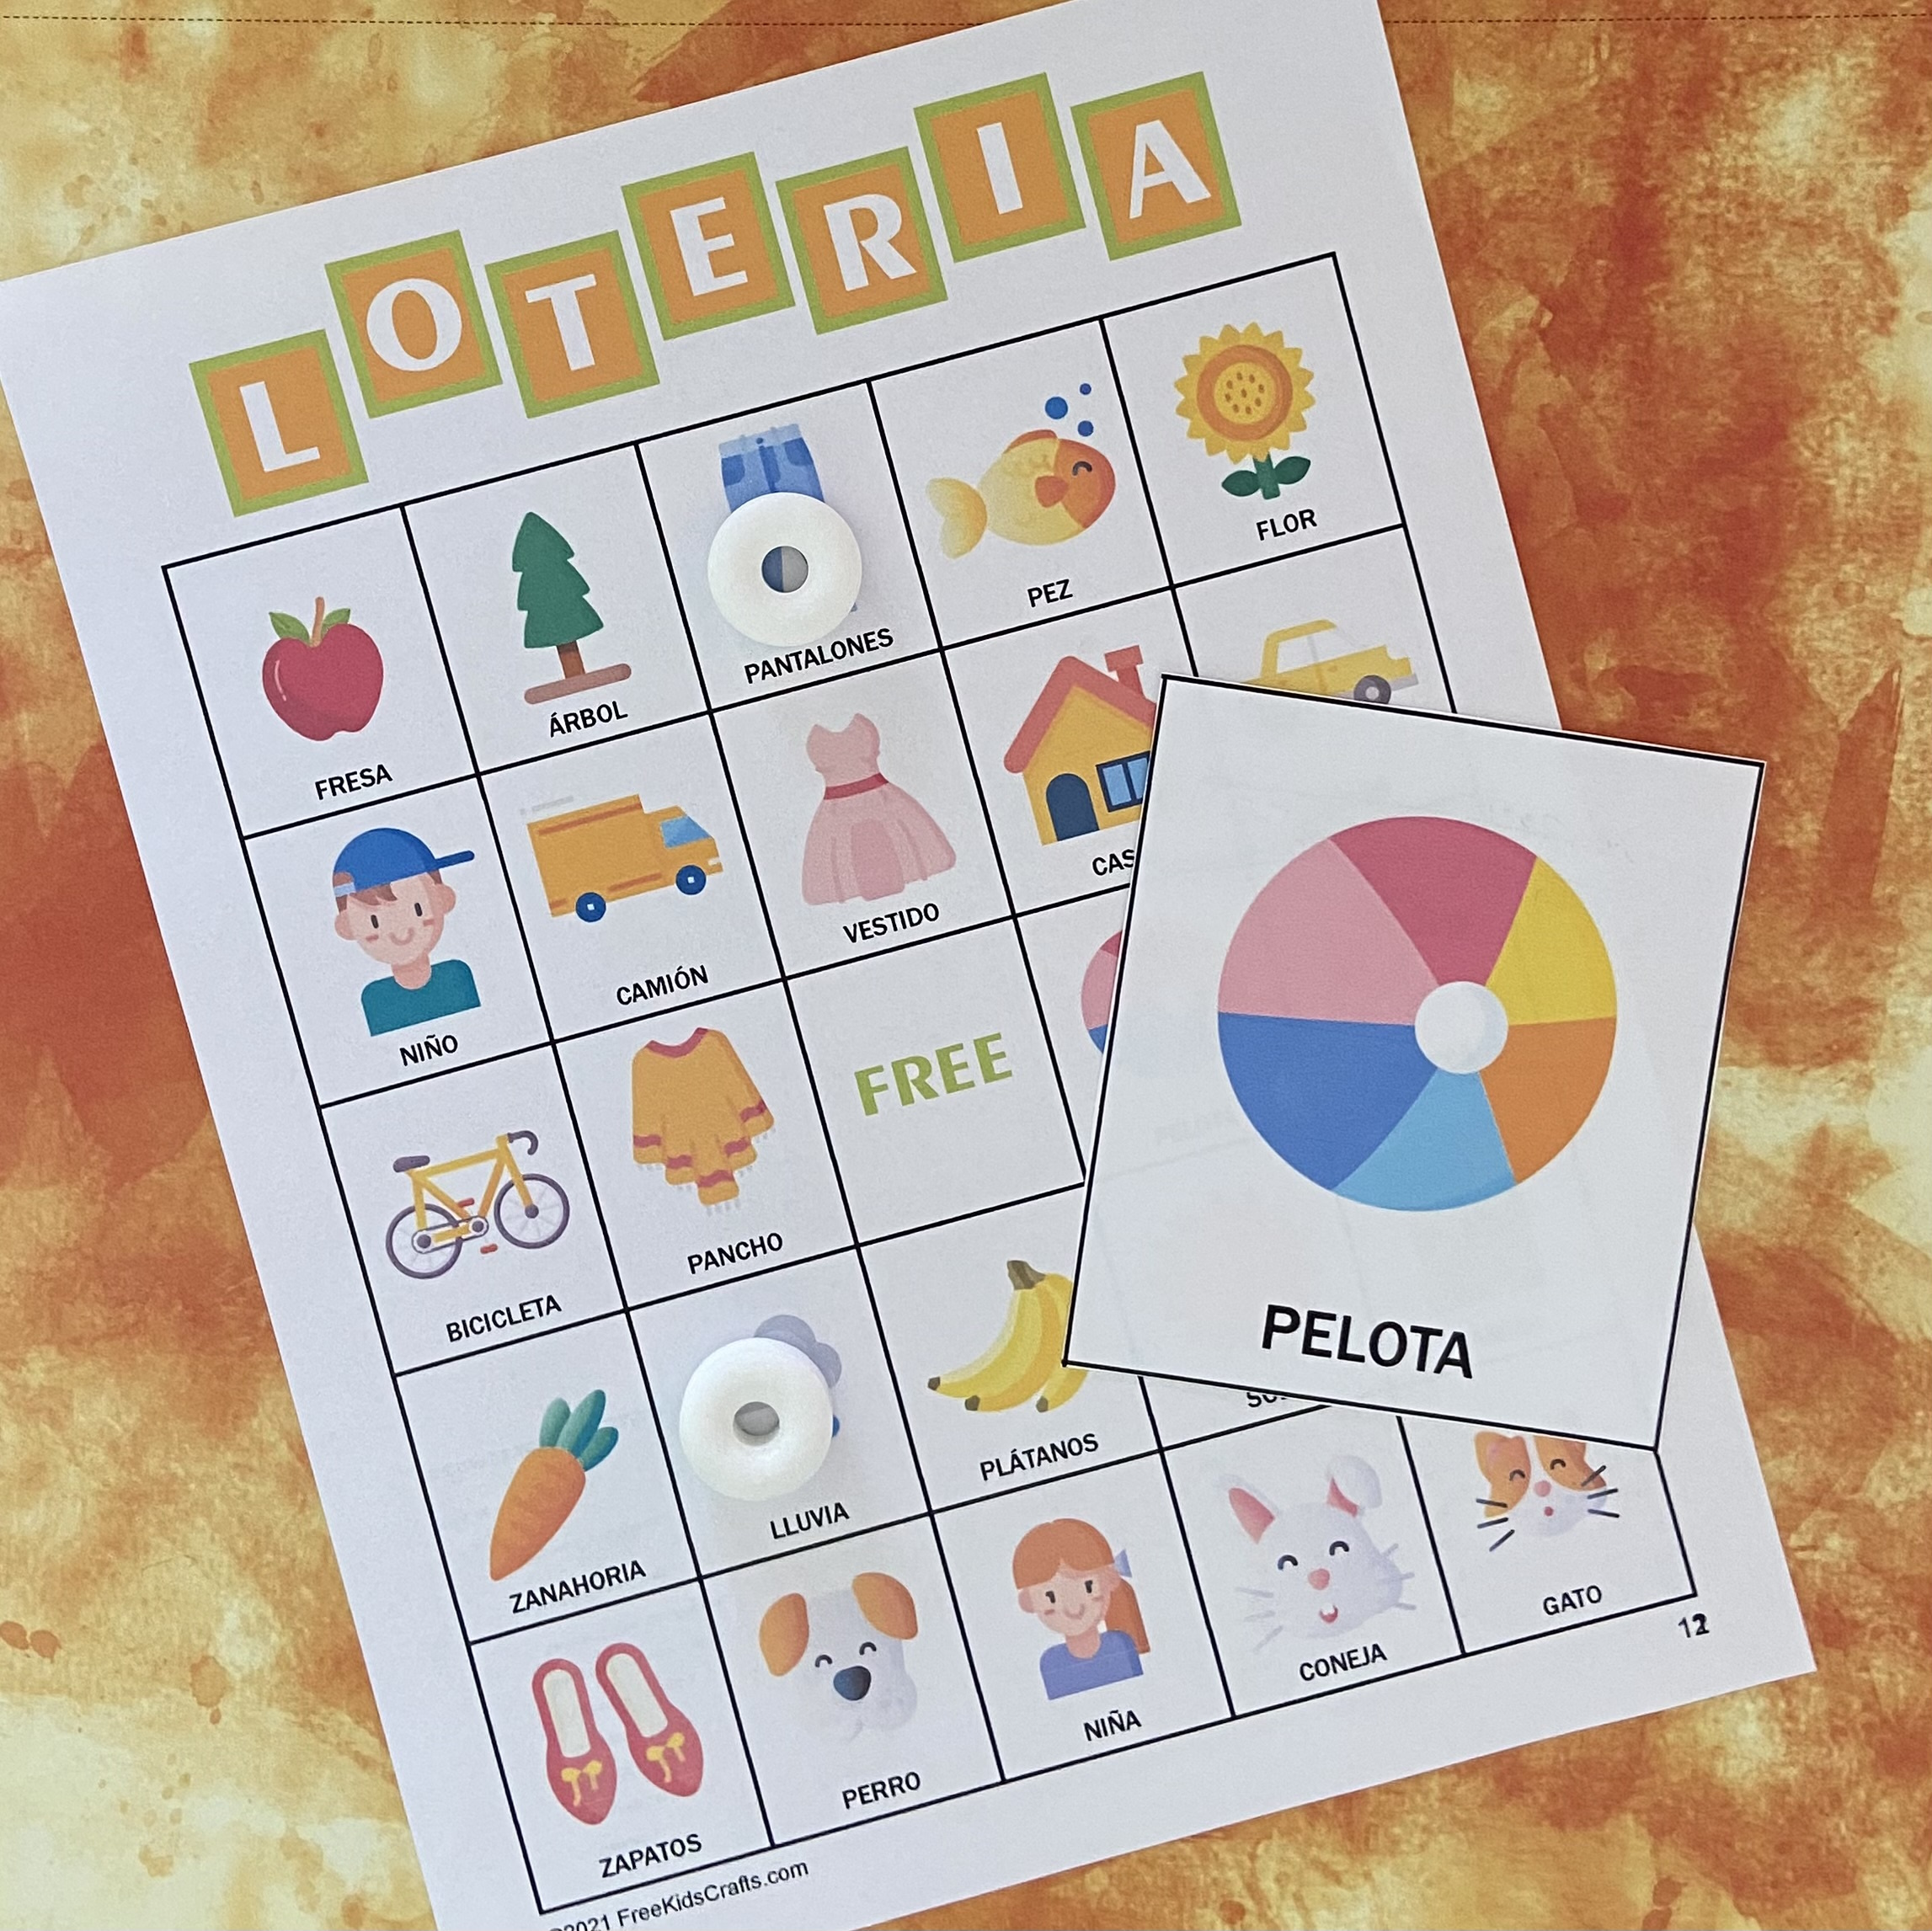 Printable Loteria game, spanish version